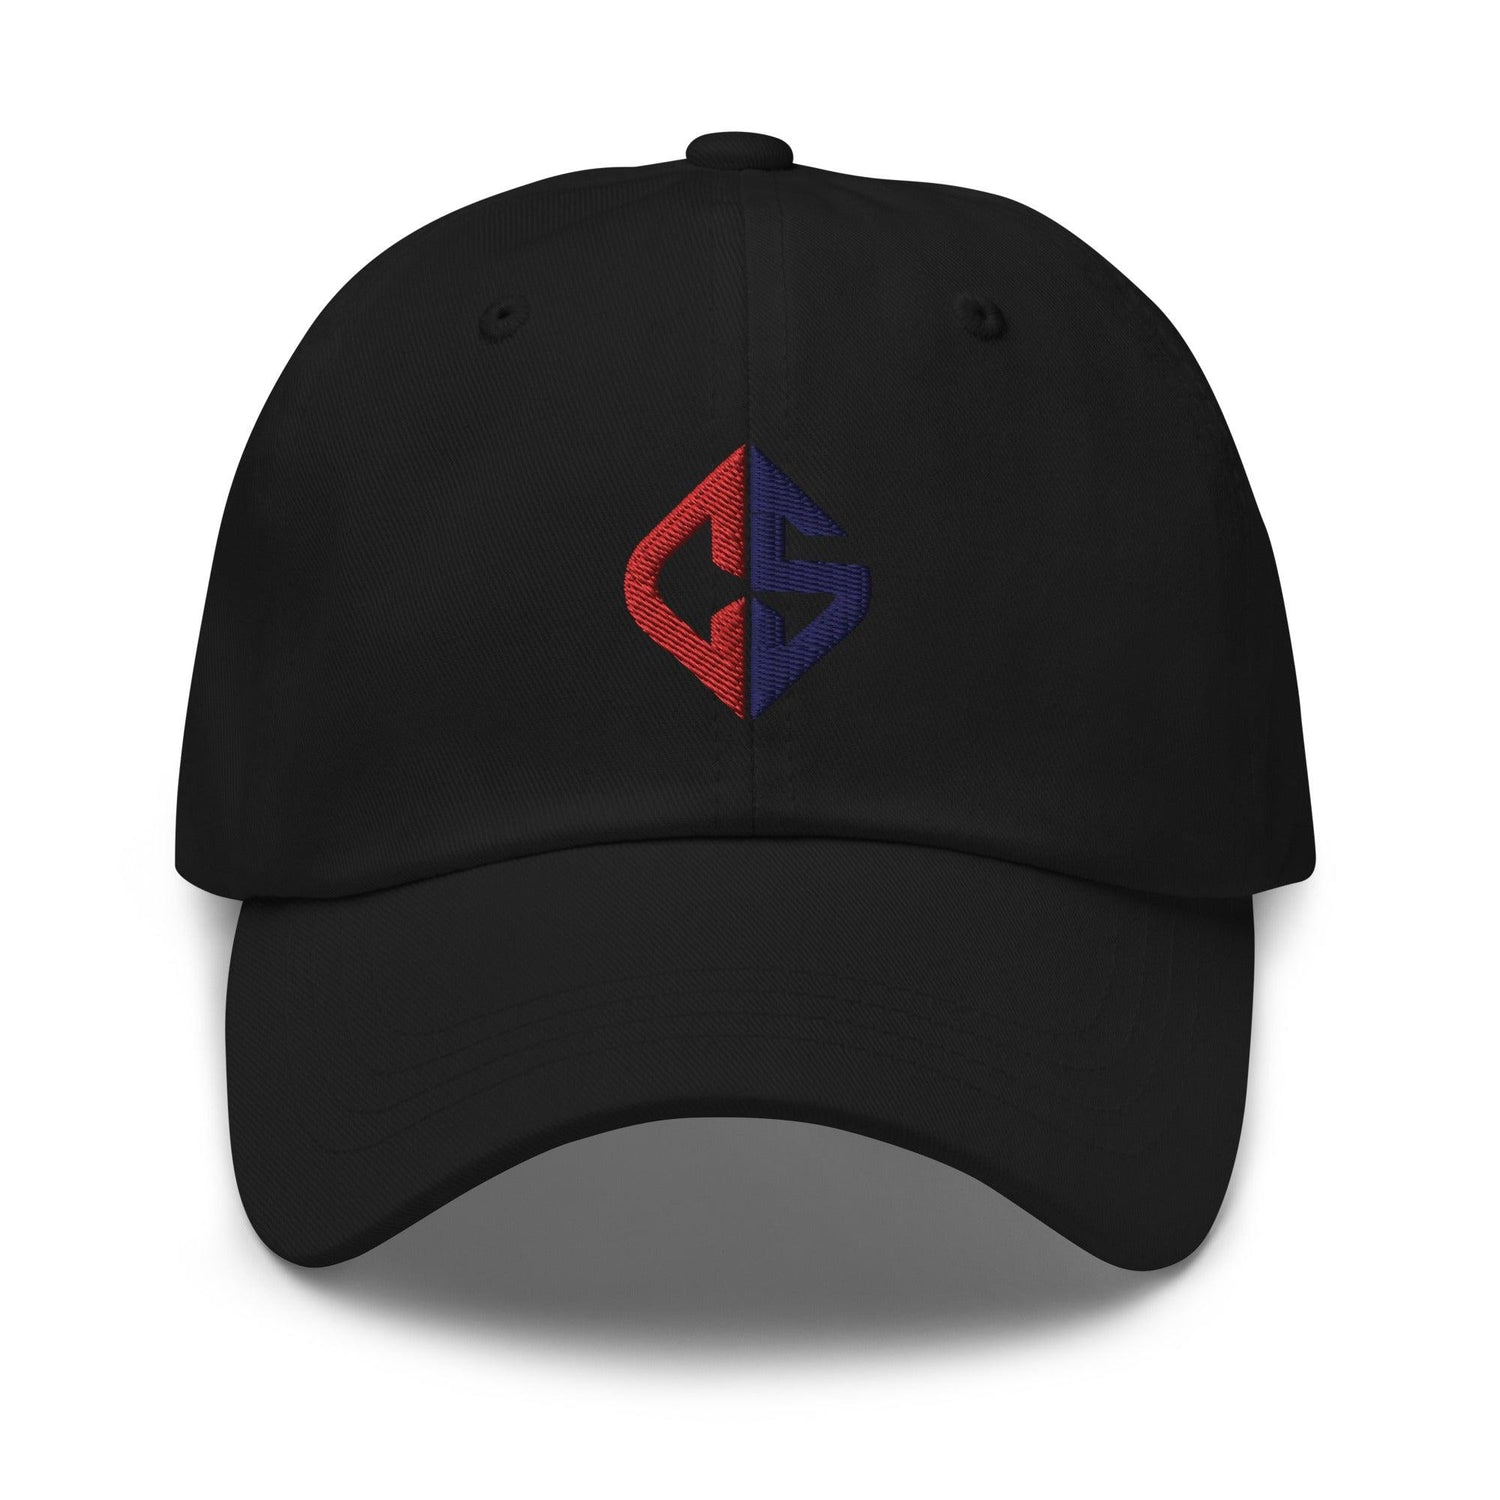 Chris Sale "Elite" hat - Fan Arch